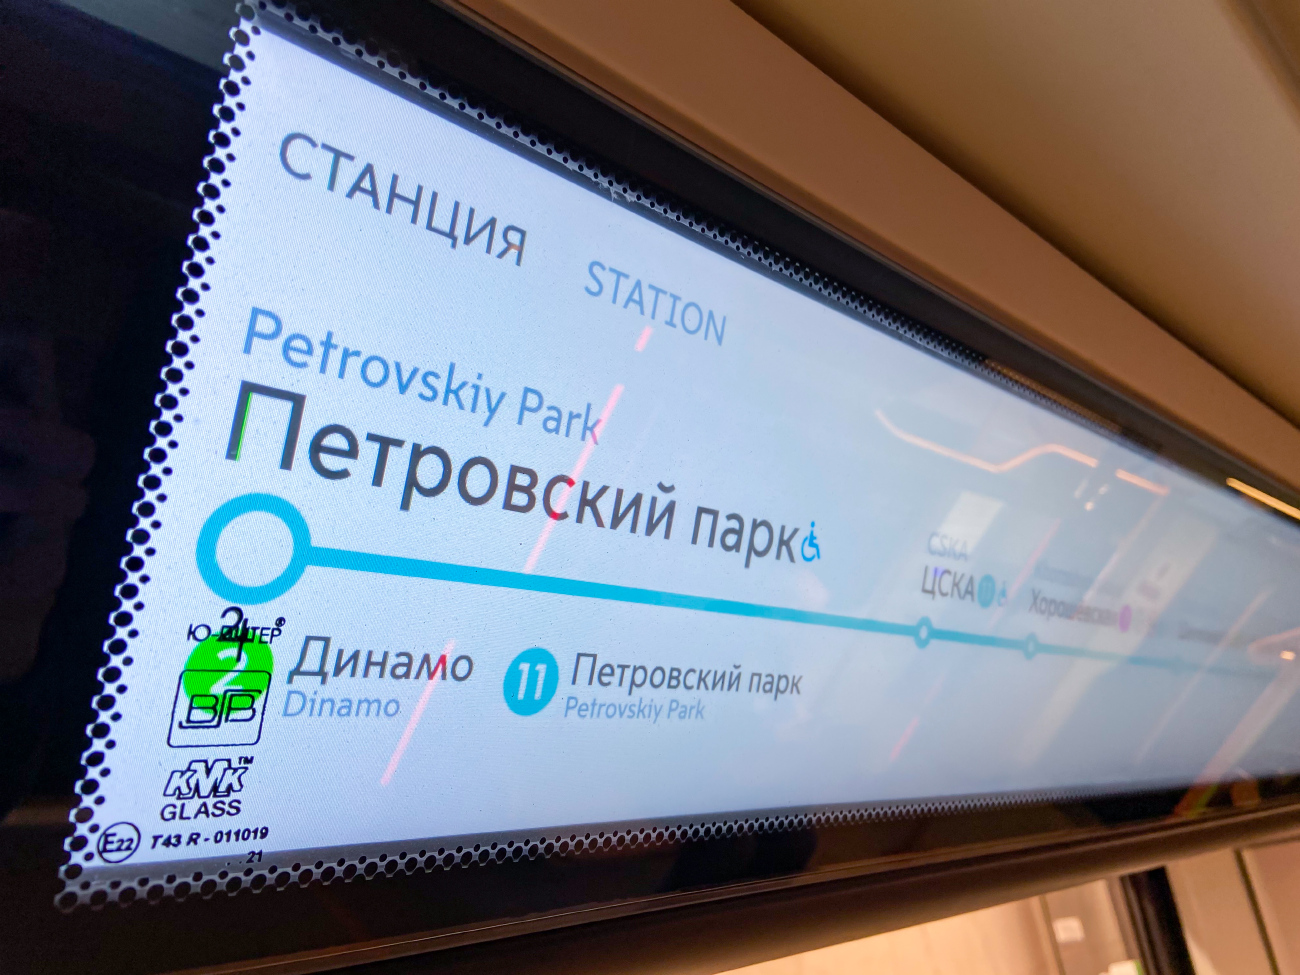 Moskwa — Metro — Maps of Individual Lines; Moskwa — Metropolitain — [11] Bol'shaya Koltsevaya Line